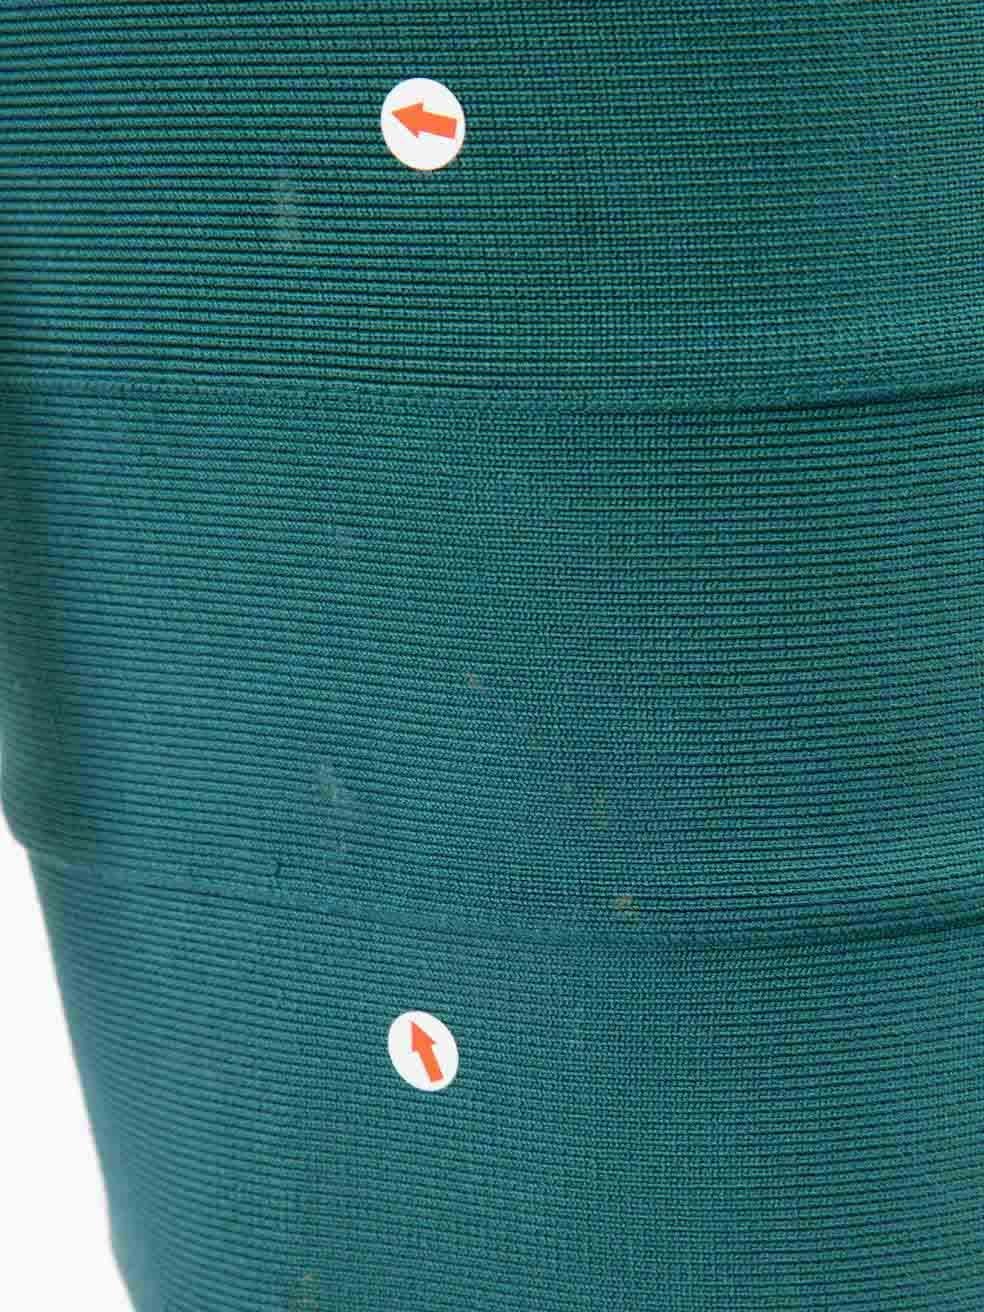 Herve Leger Green One-Shoulder Bandage Mini Dress Size XS For Sale 1